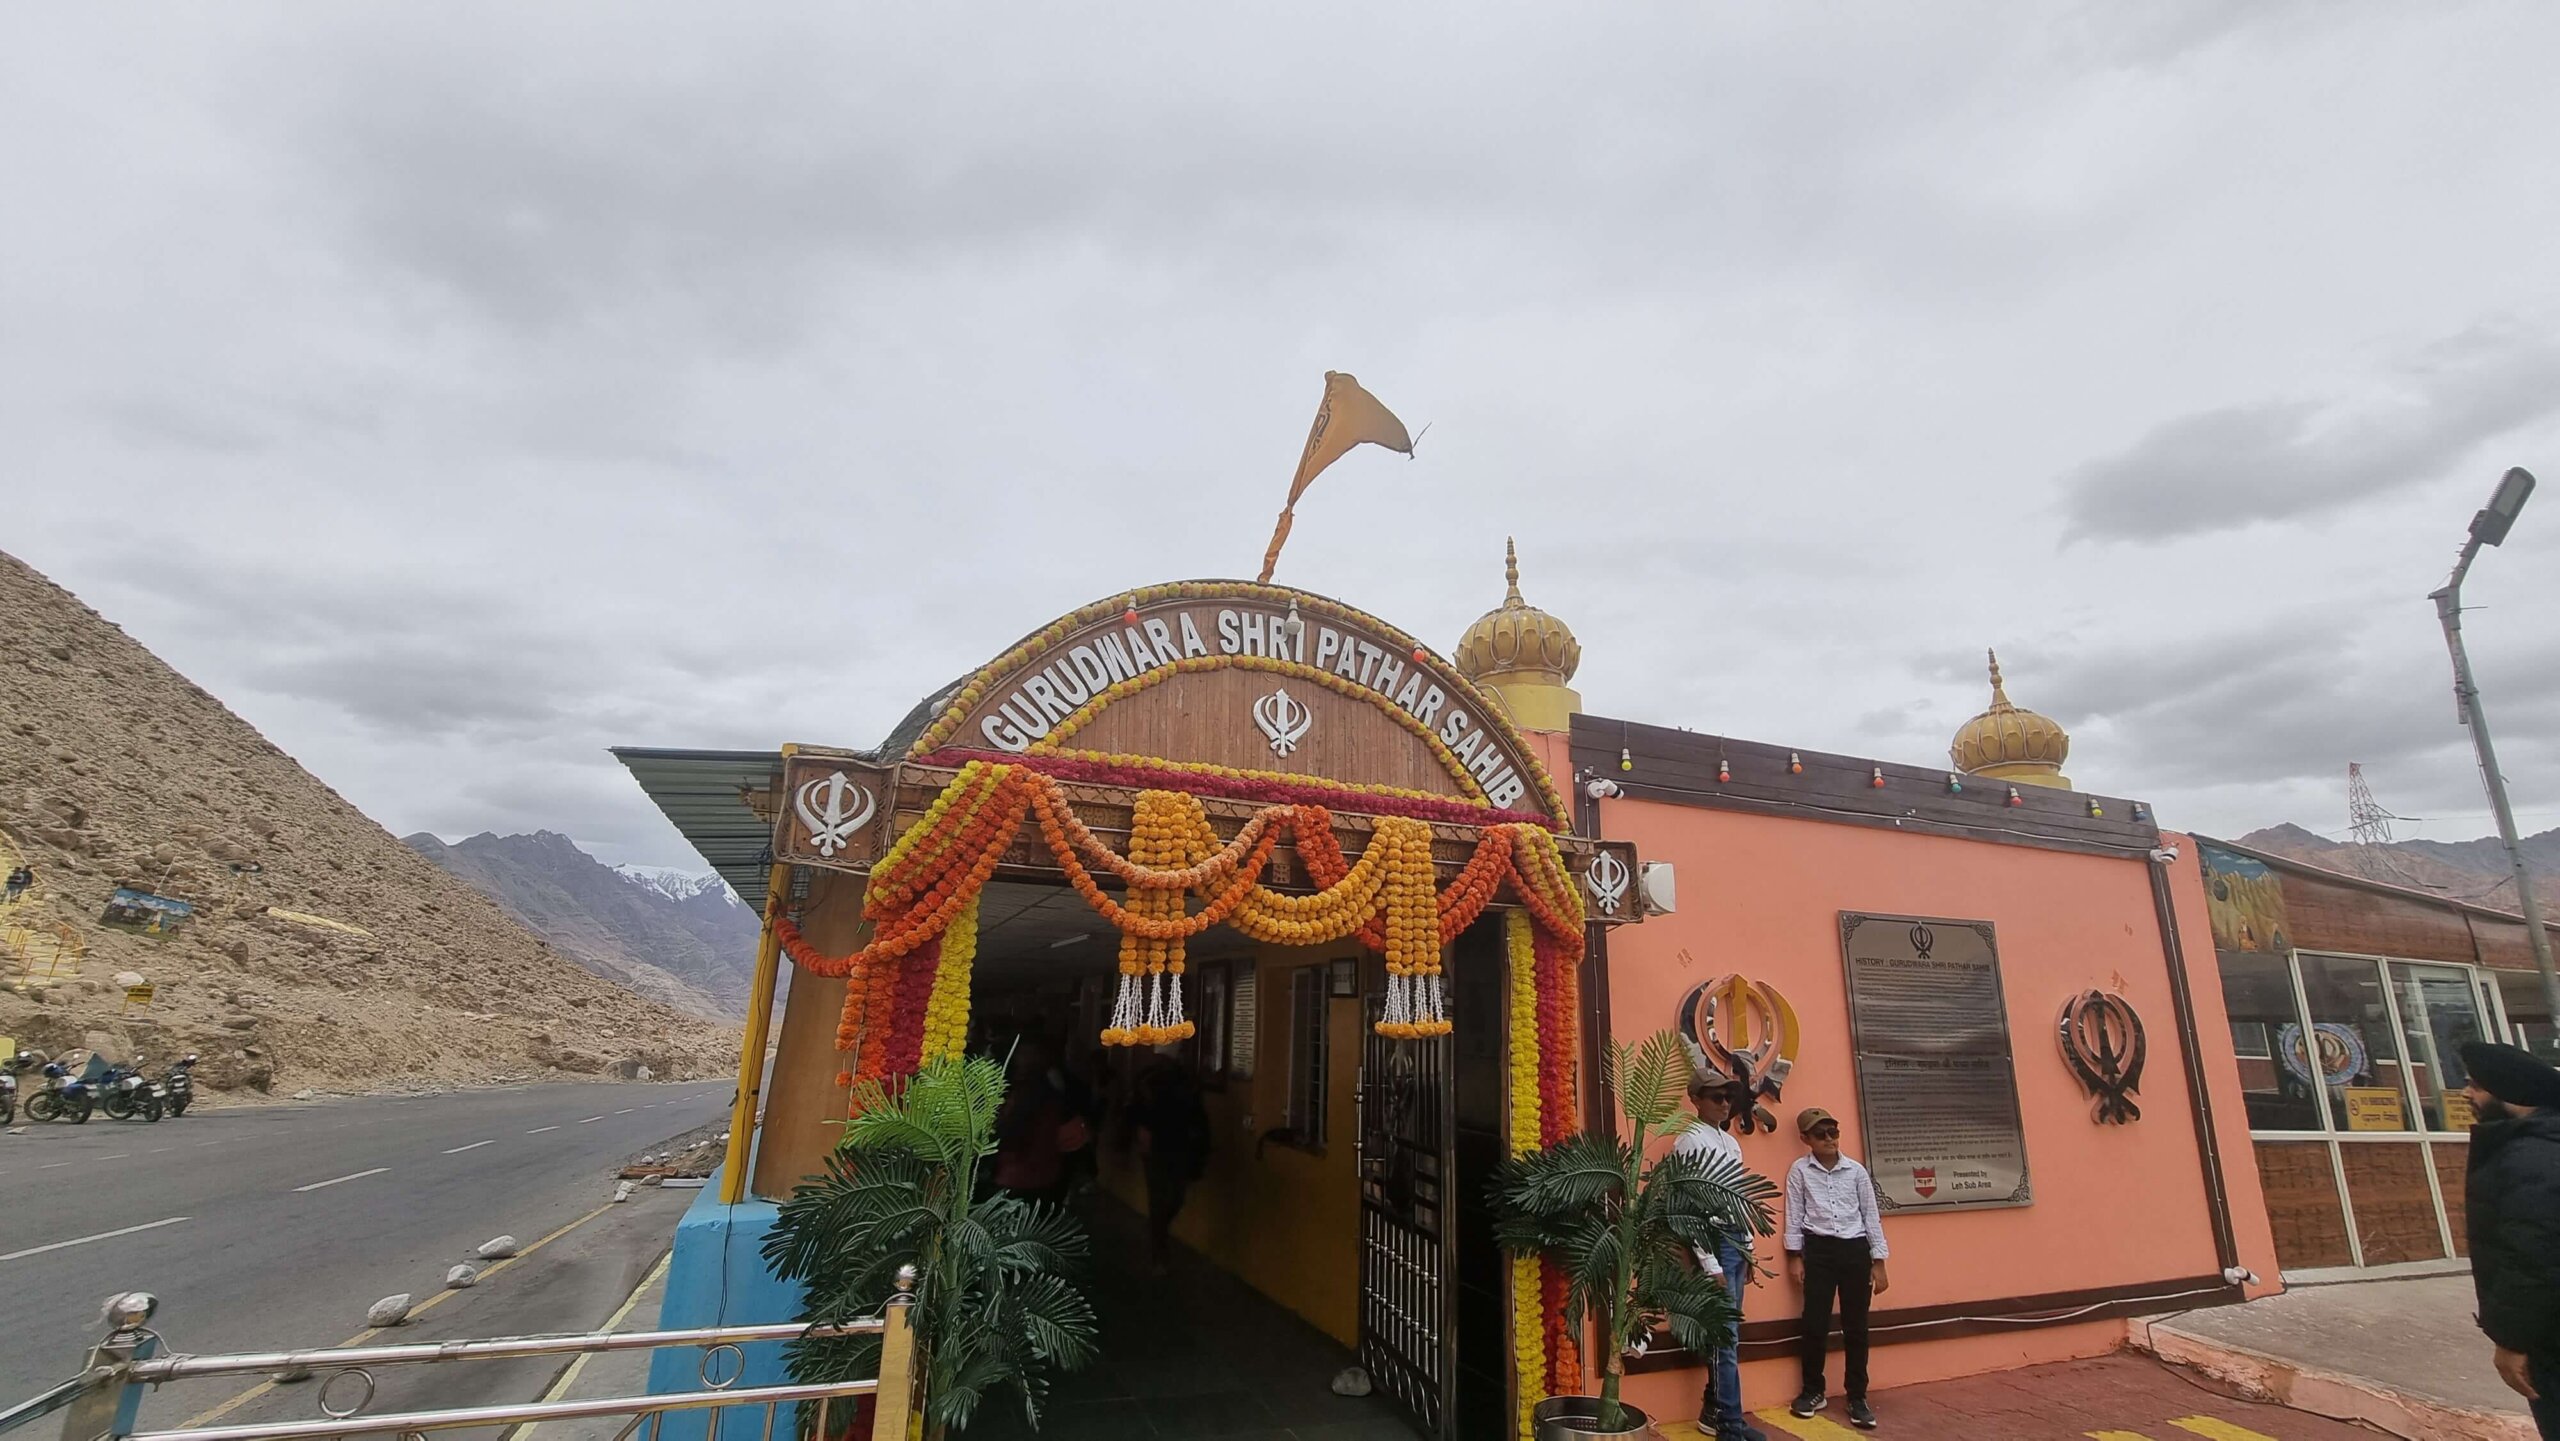 Gurudwara Shri Pathar Sahib is built in the fond memory of Guru Nanak Dev ji, the founder Guru of the Sikh faith